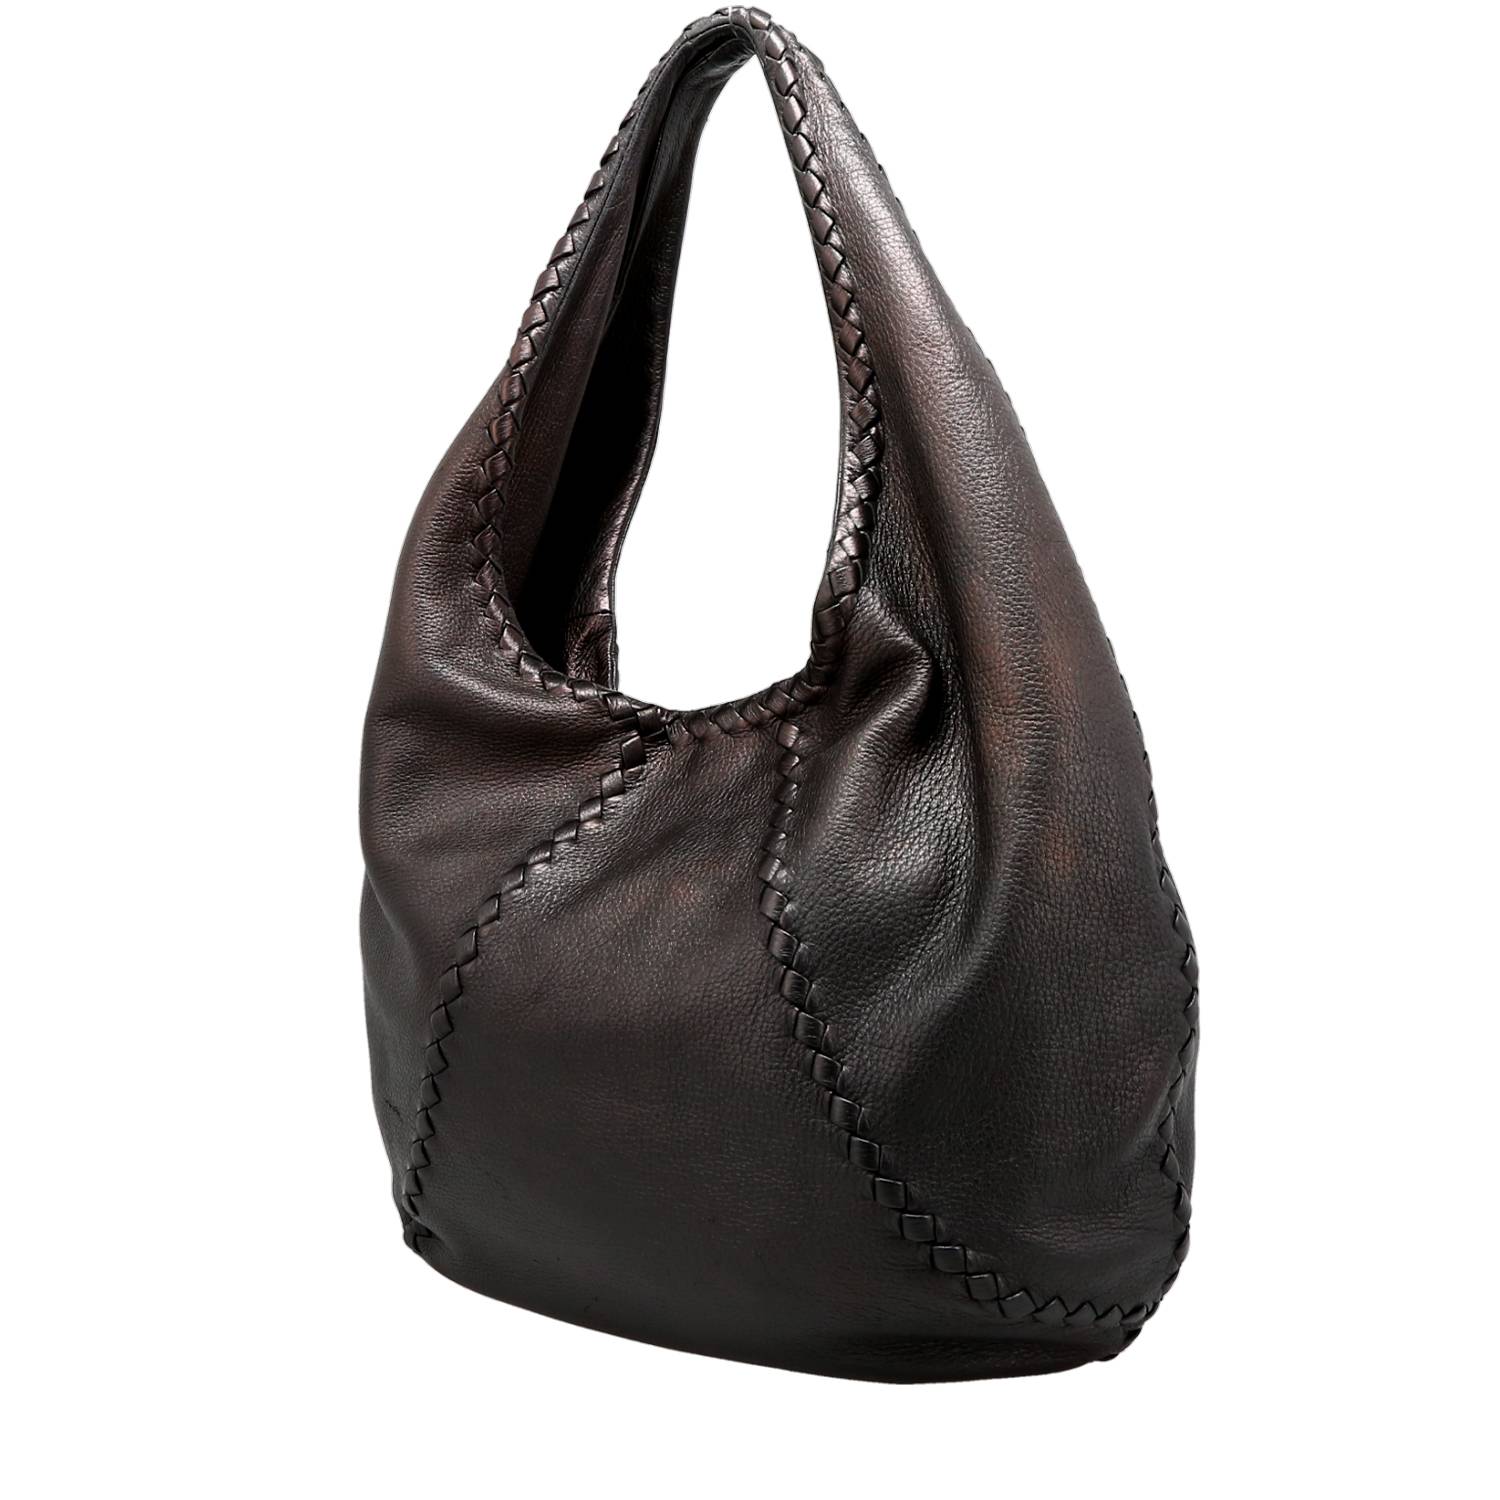 Bottega Veneta The Shoulder Pouch Handbag in Black Leather